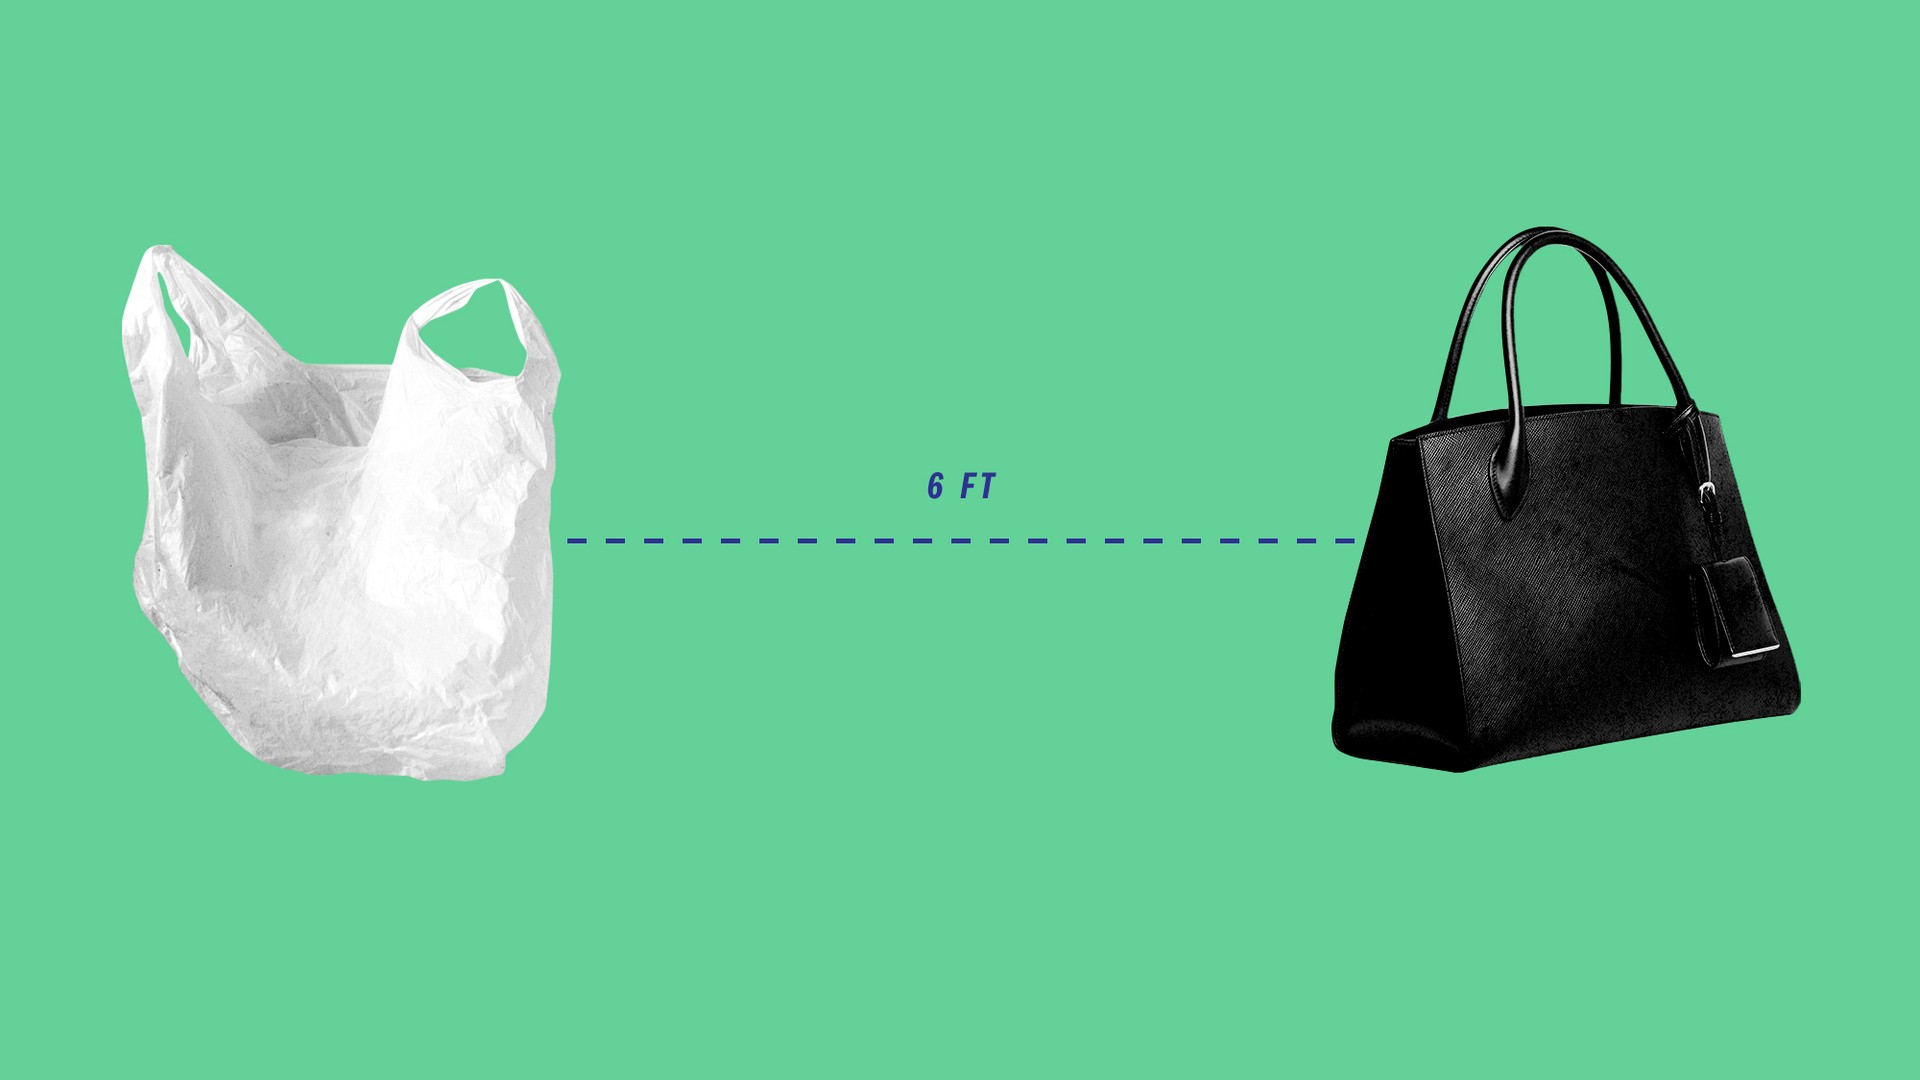 A plastic bag and a black leather handbag six feet apart